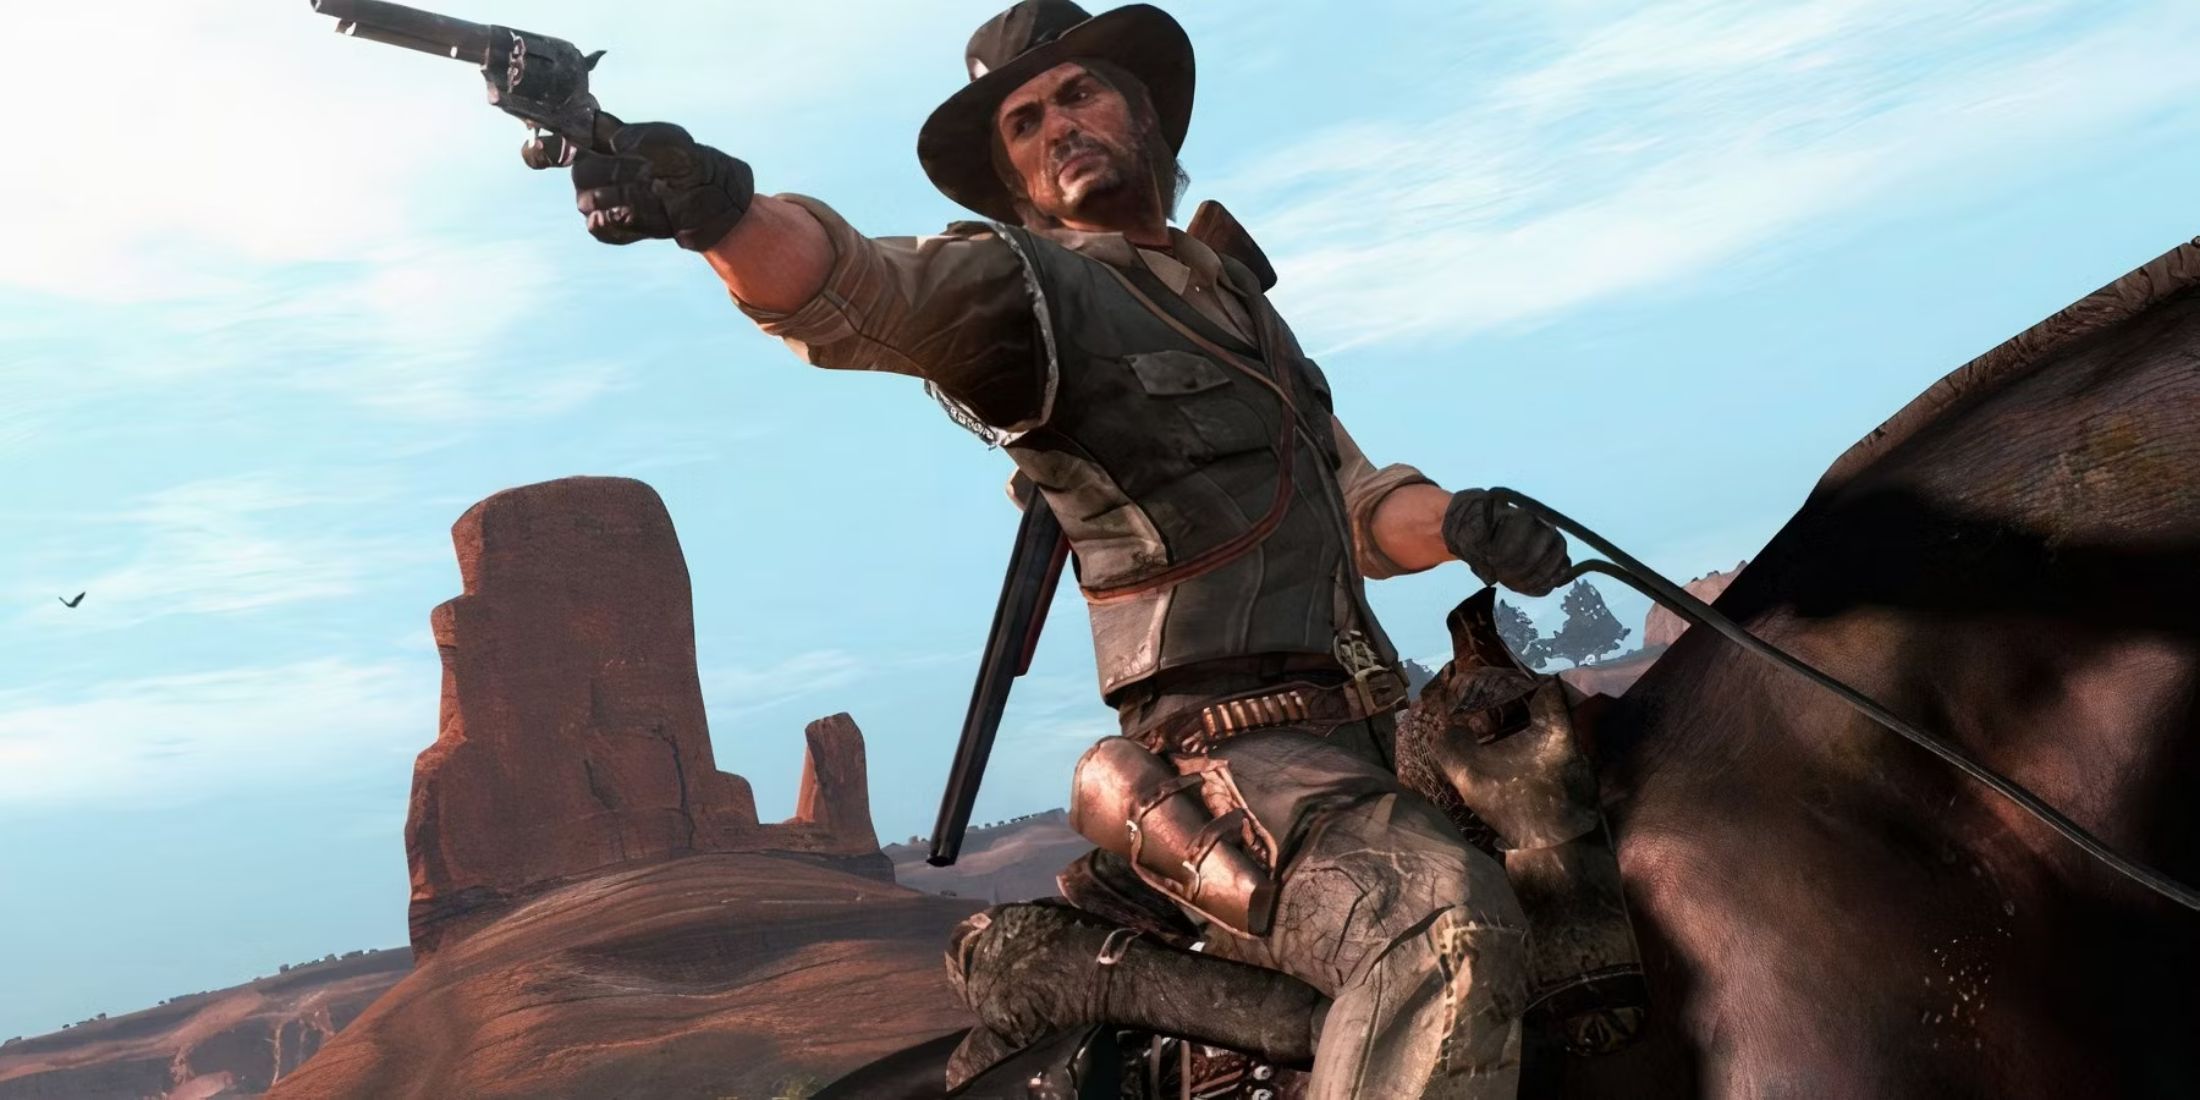 John Marston on horseback aiming a gun in Red Dead Redemption